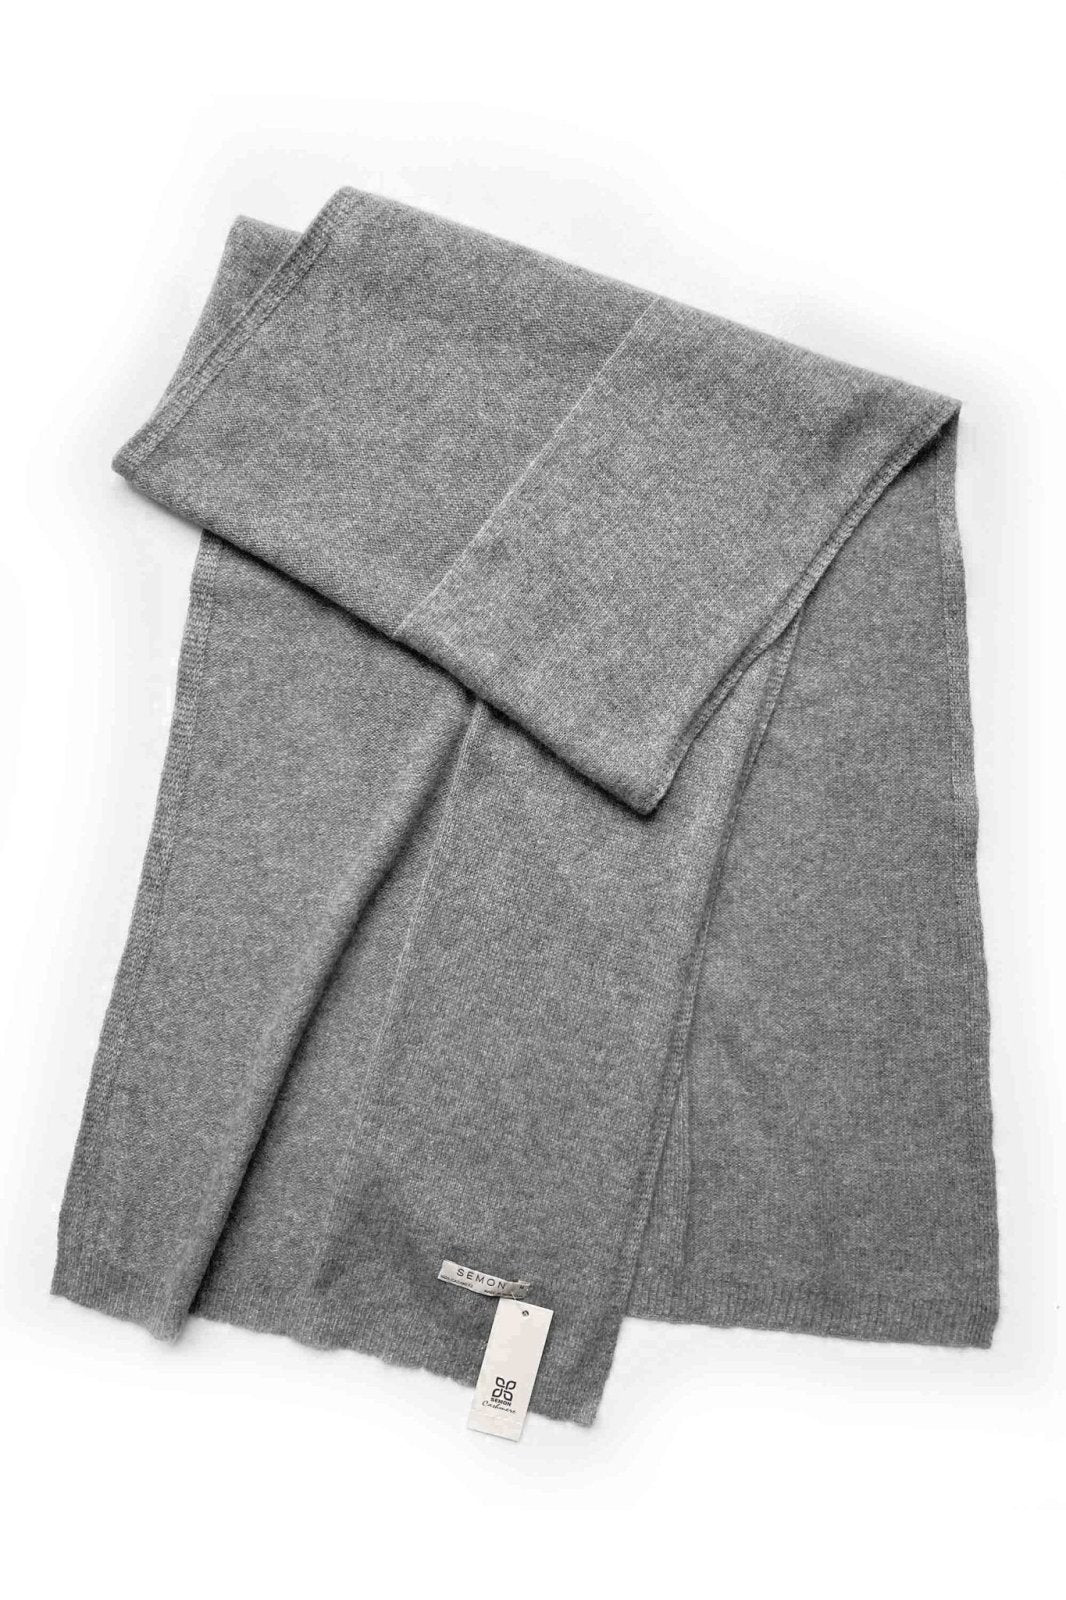 Unisex cashmere scarf in mid grey - SEMON Cashmere